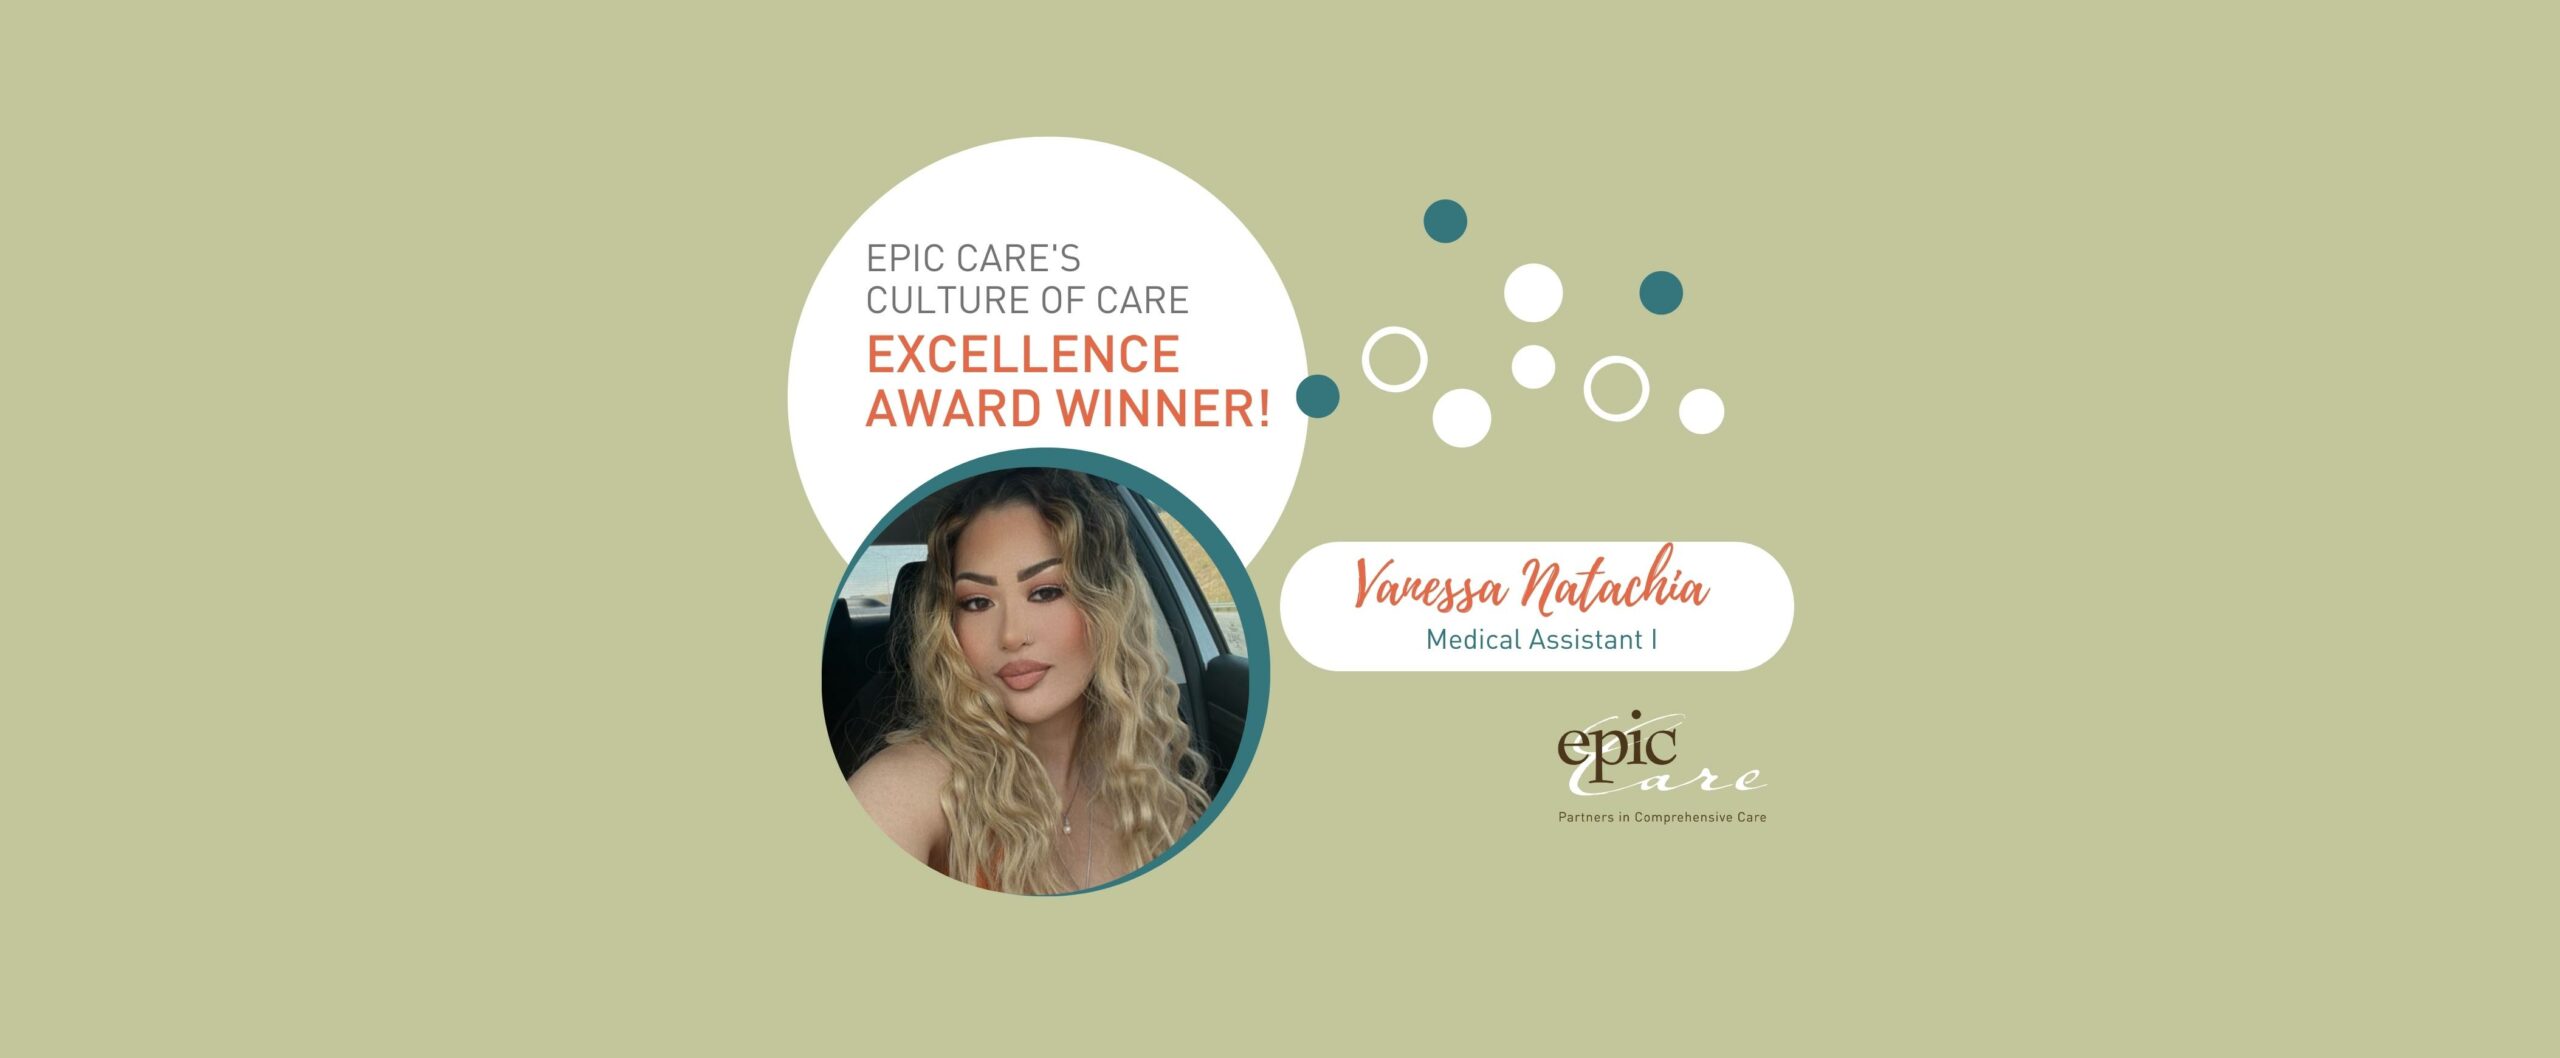 Epic Care’s Culture of CARE Excellence Award Winner! – Vanessa Natachia